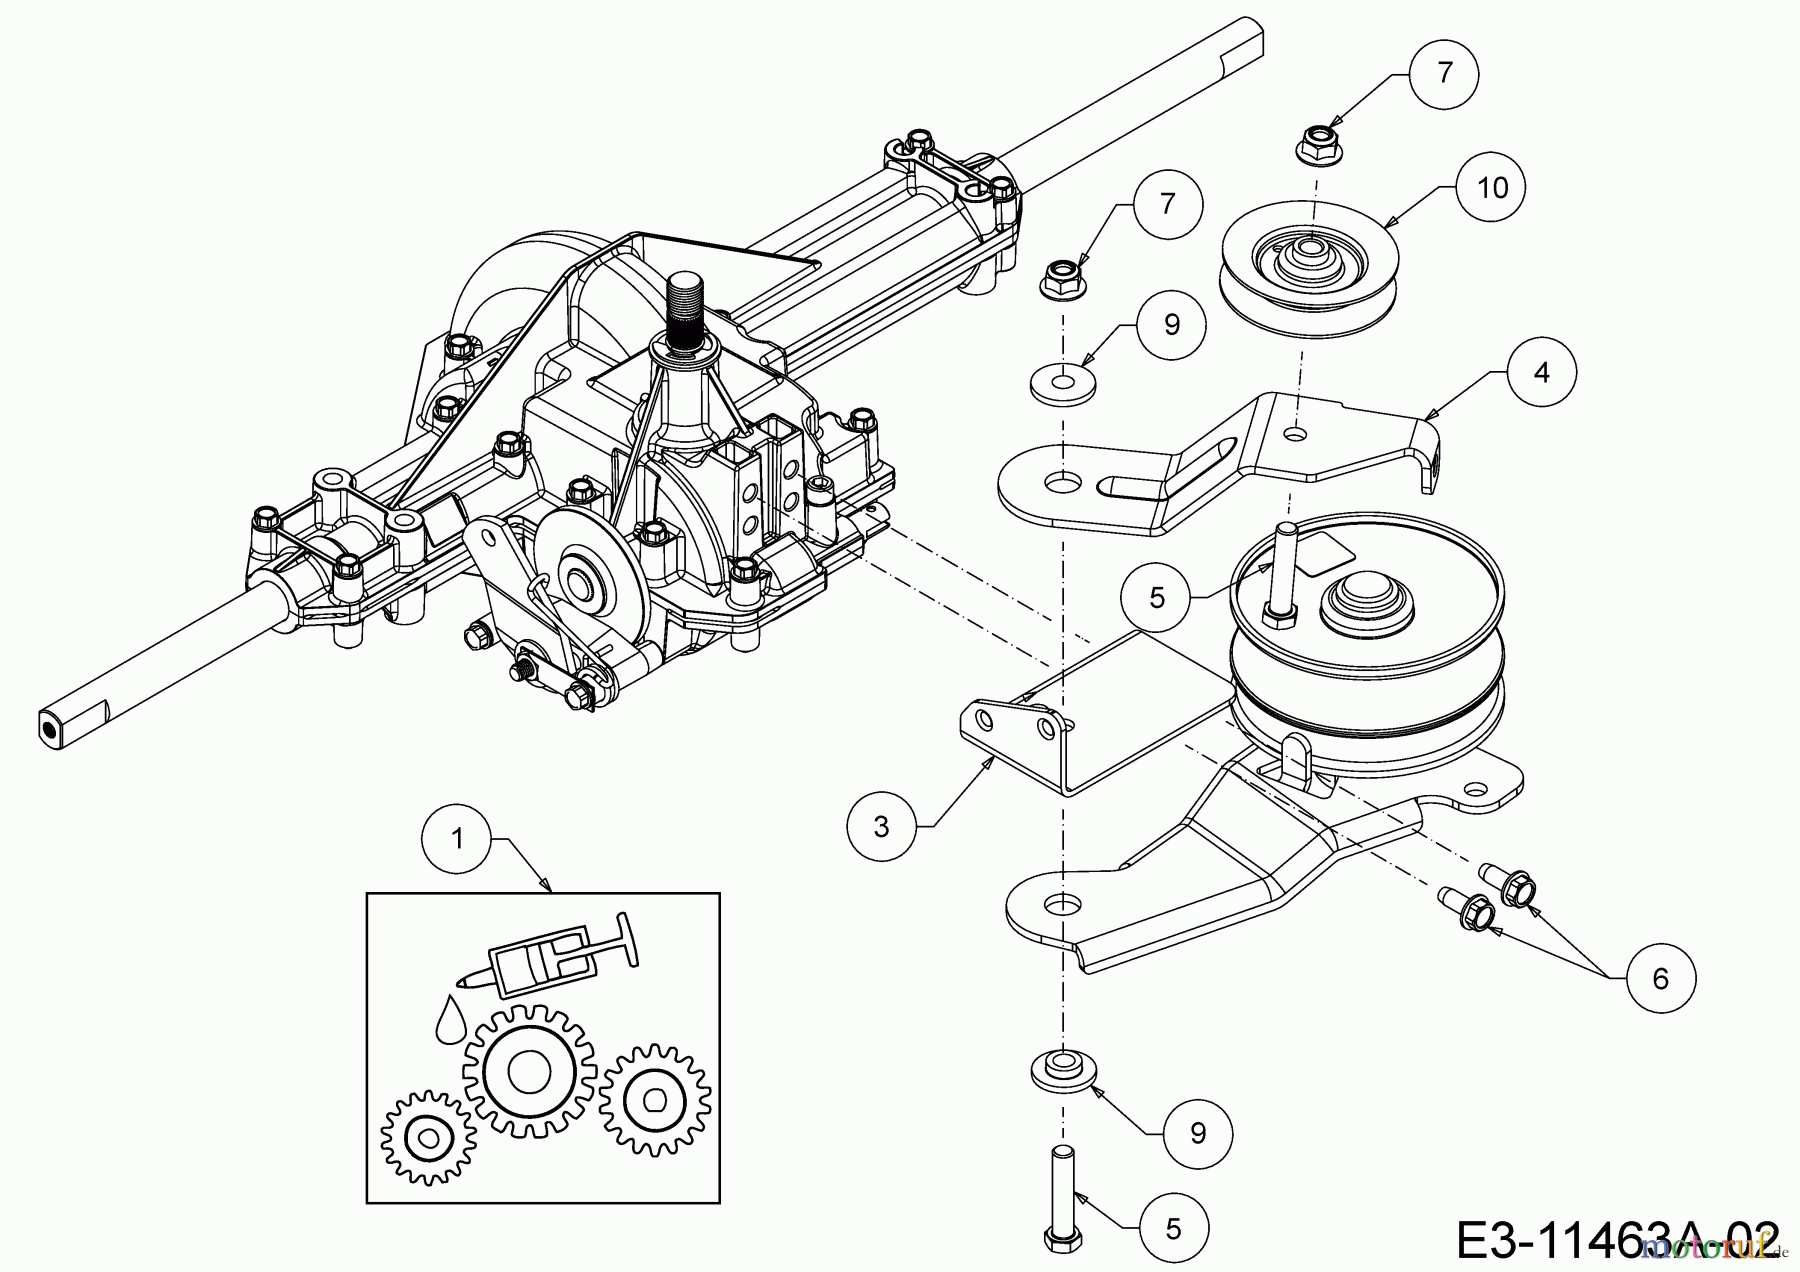  MTD Lawn tractors Smart RF 125 13A776KF600  (2019) Idle pullie gearbox